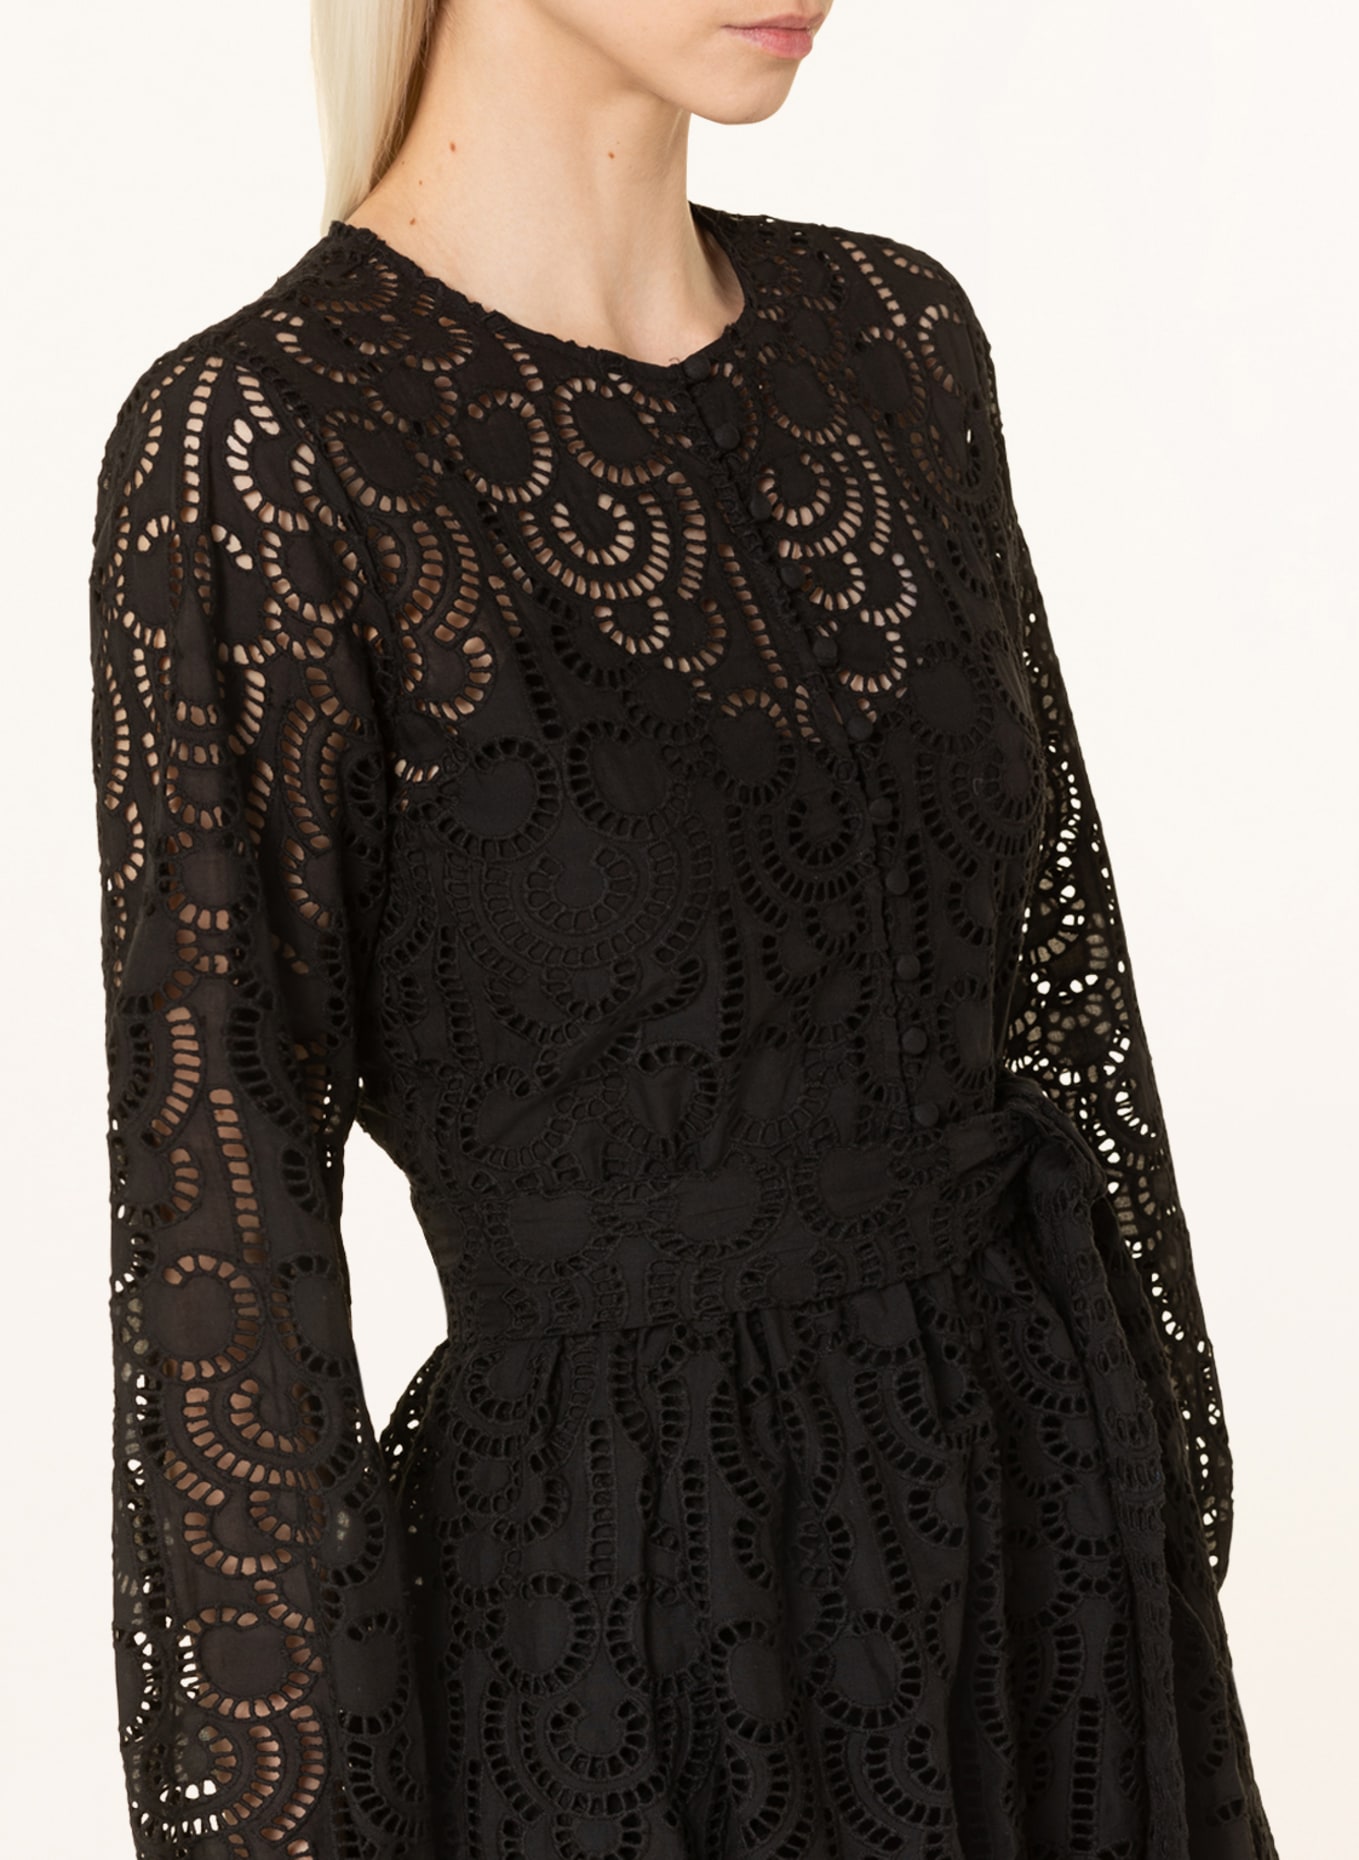 MRS & HUGS Shirt dress made of lace, Color: BLACK (Image 4)